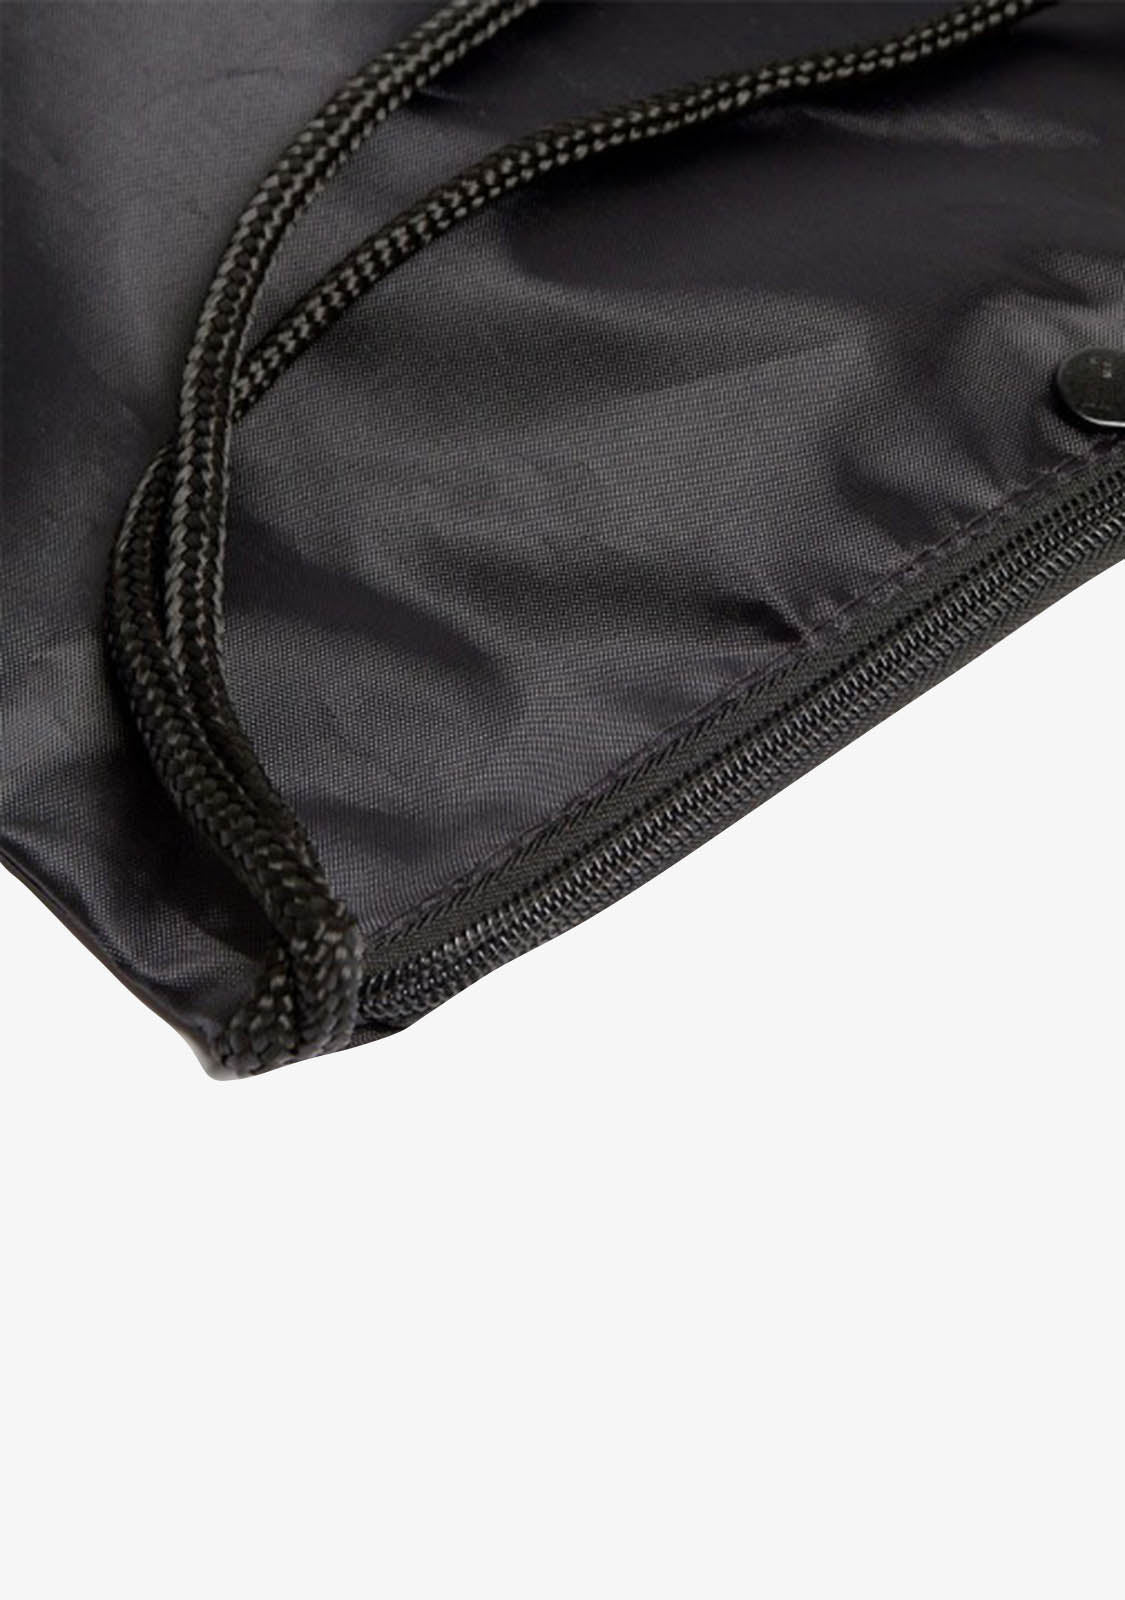 Groovy Drawstring Bag Black